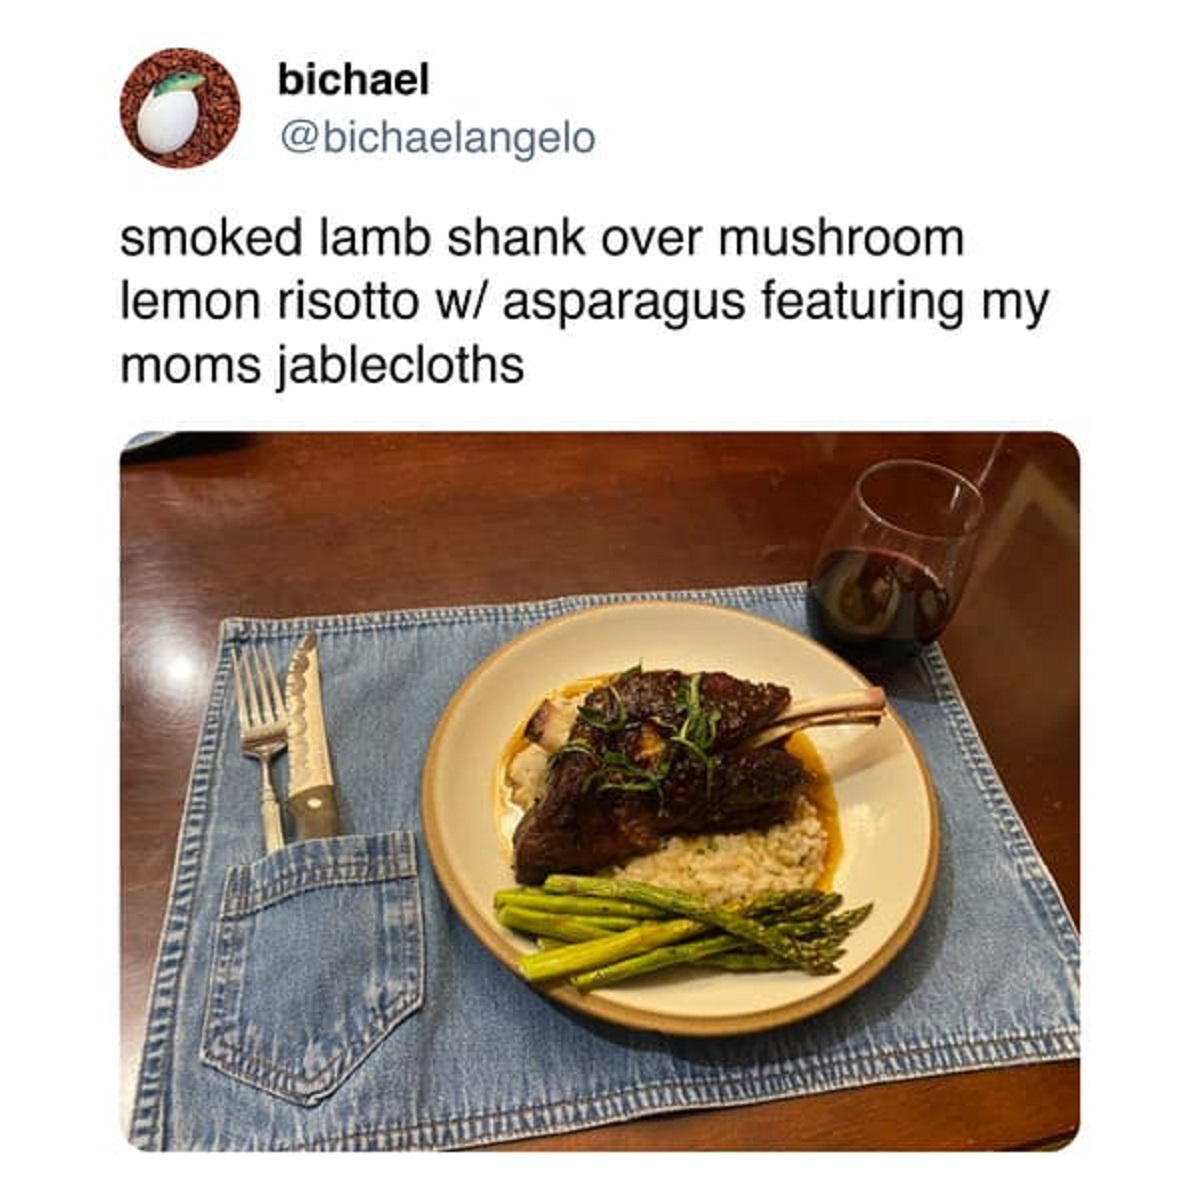 Smoked lamb shank - bichael smoked lamb shank over mushroom lemon risotto w asparagus featuring my moms jablecloths